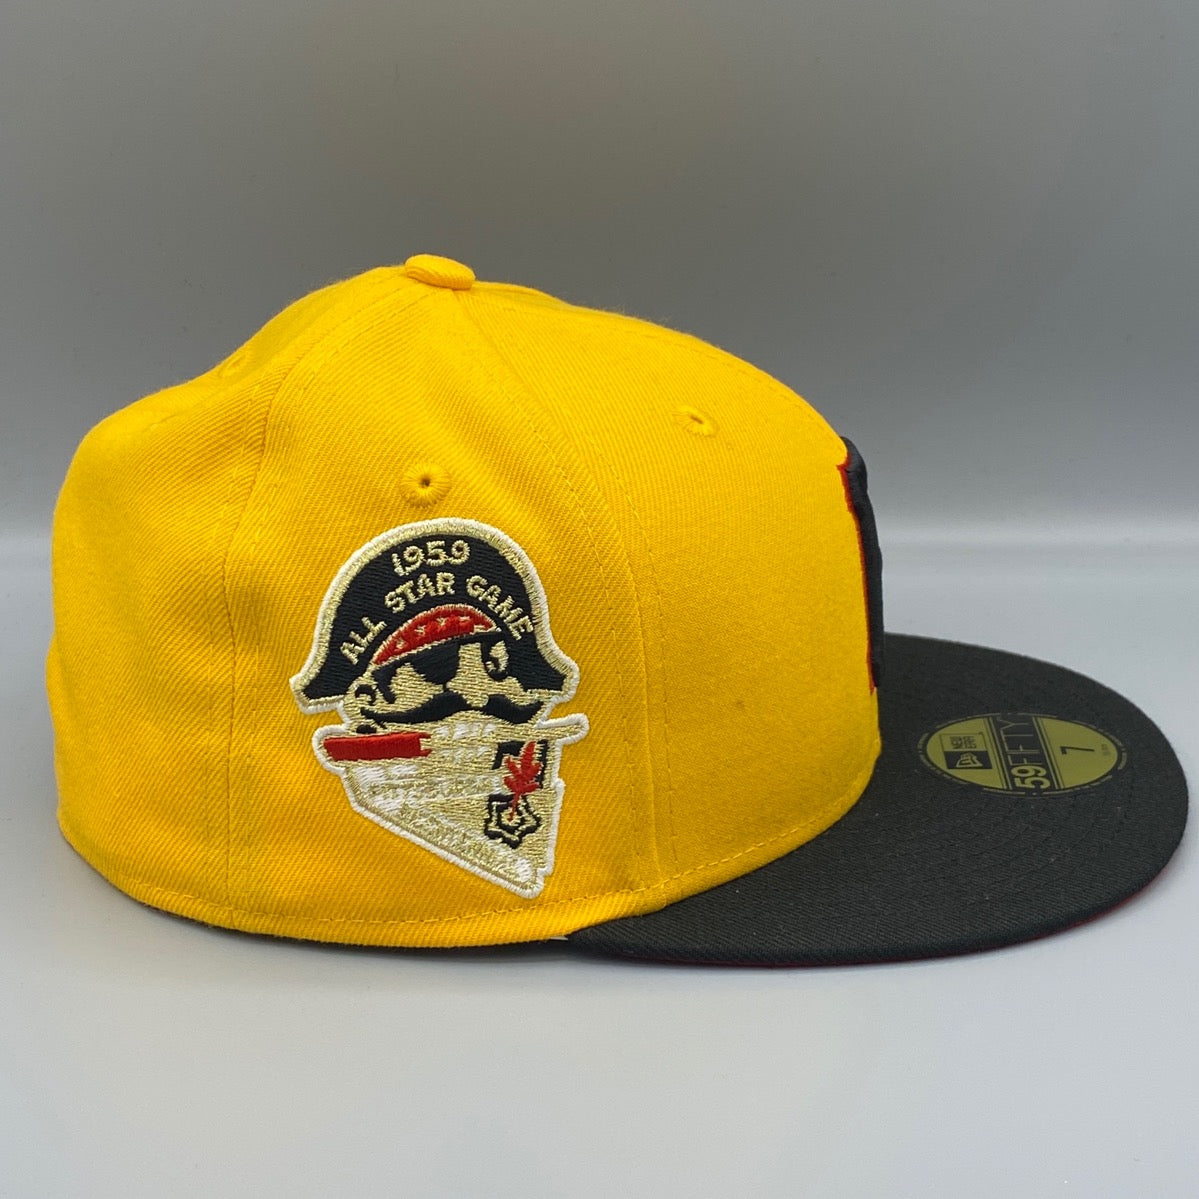 New Era Black Yellow Grey Bottom Pittsburgh Pirates 1959 All Star